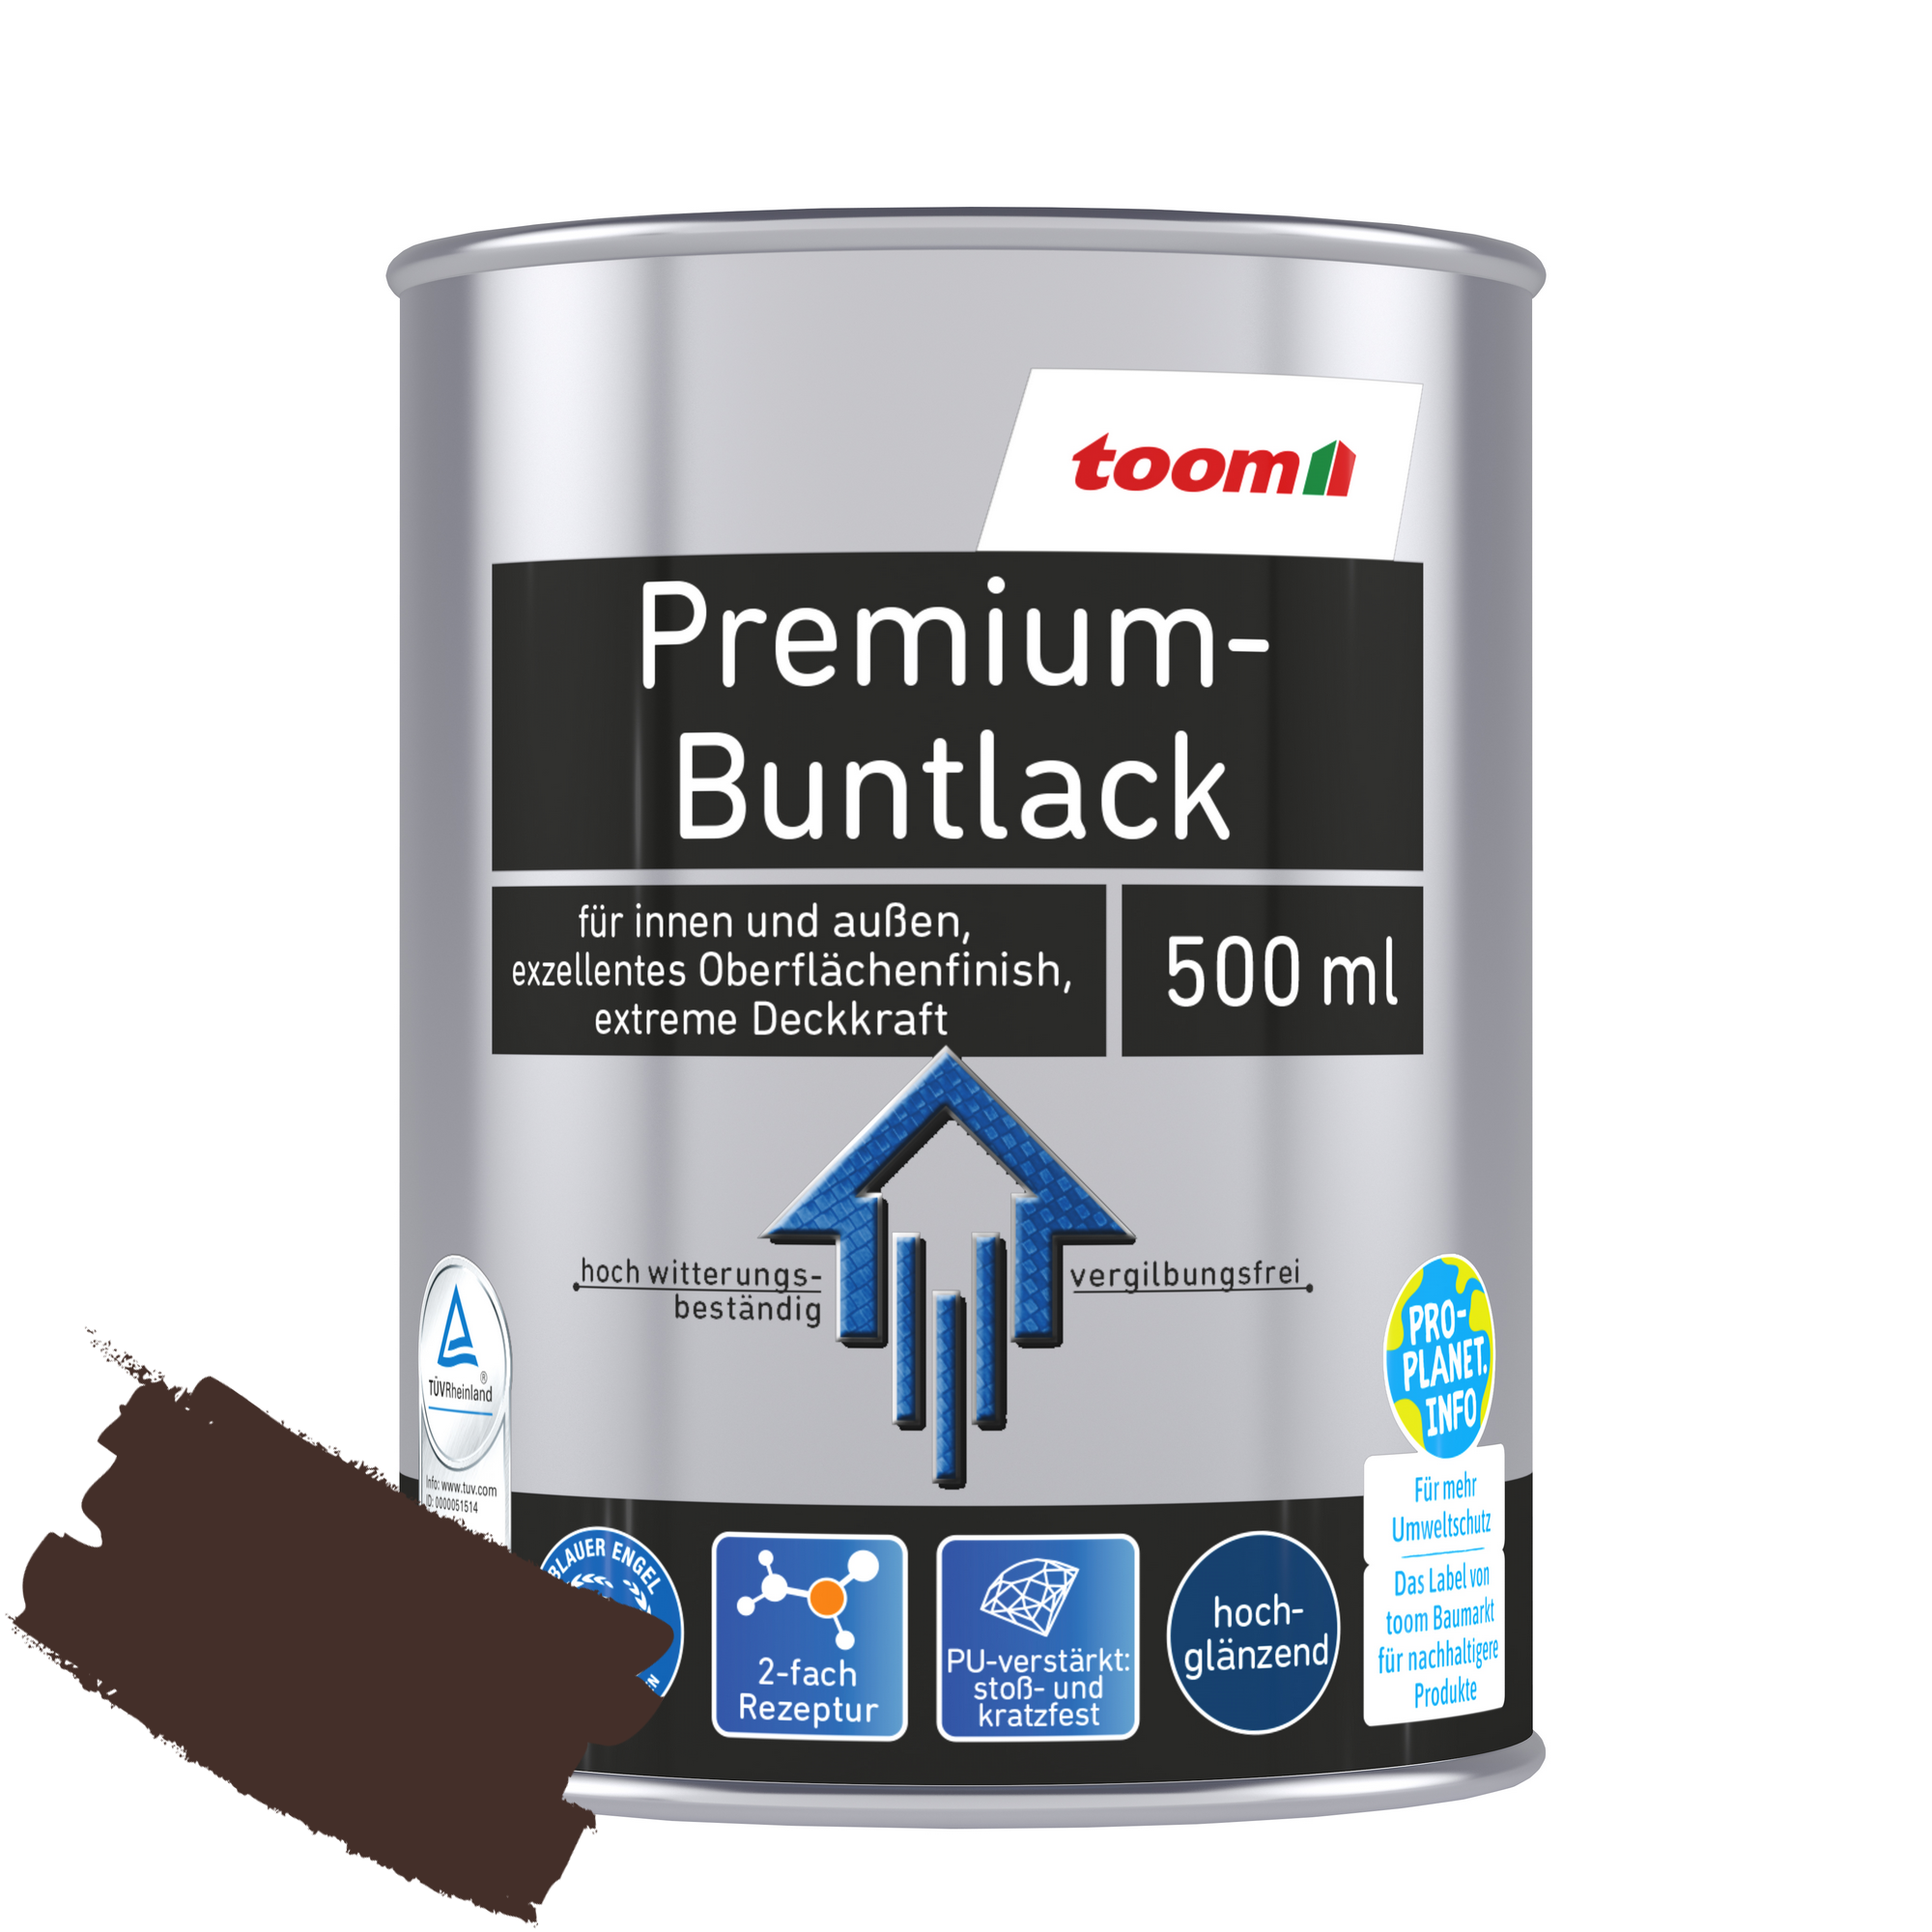 Premium-Buntlack schokobraun glänzend 500 ml + product picture